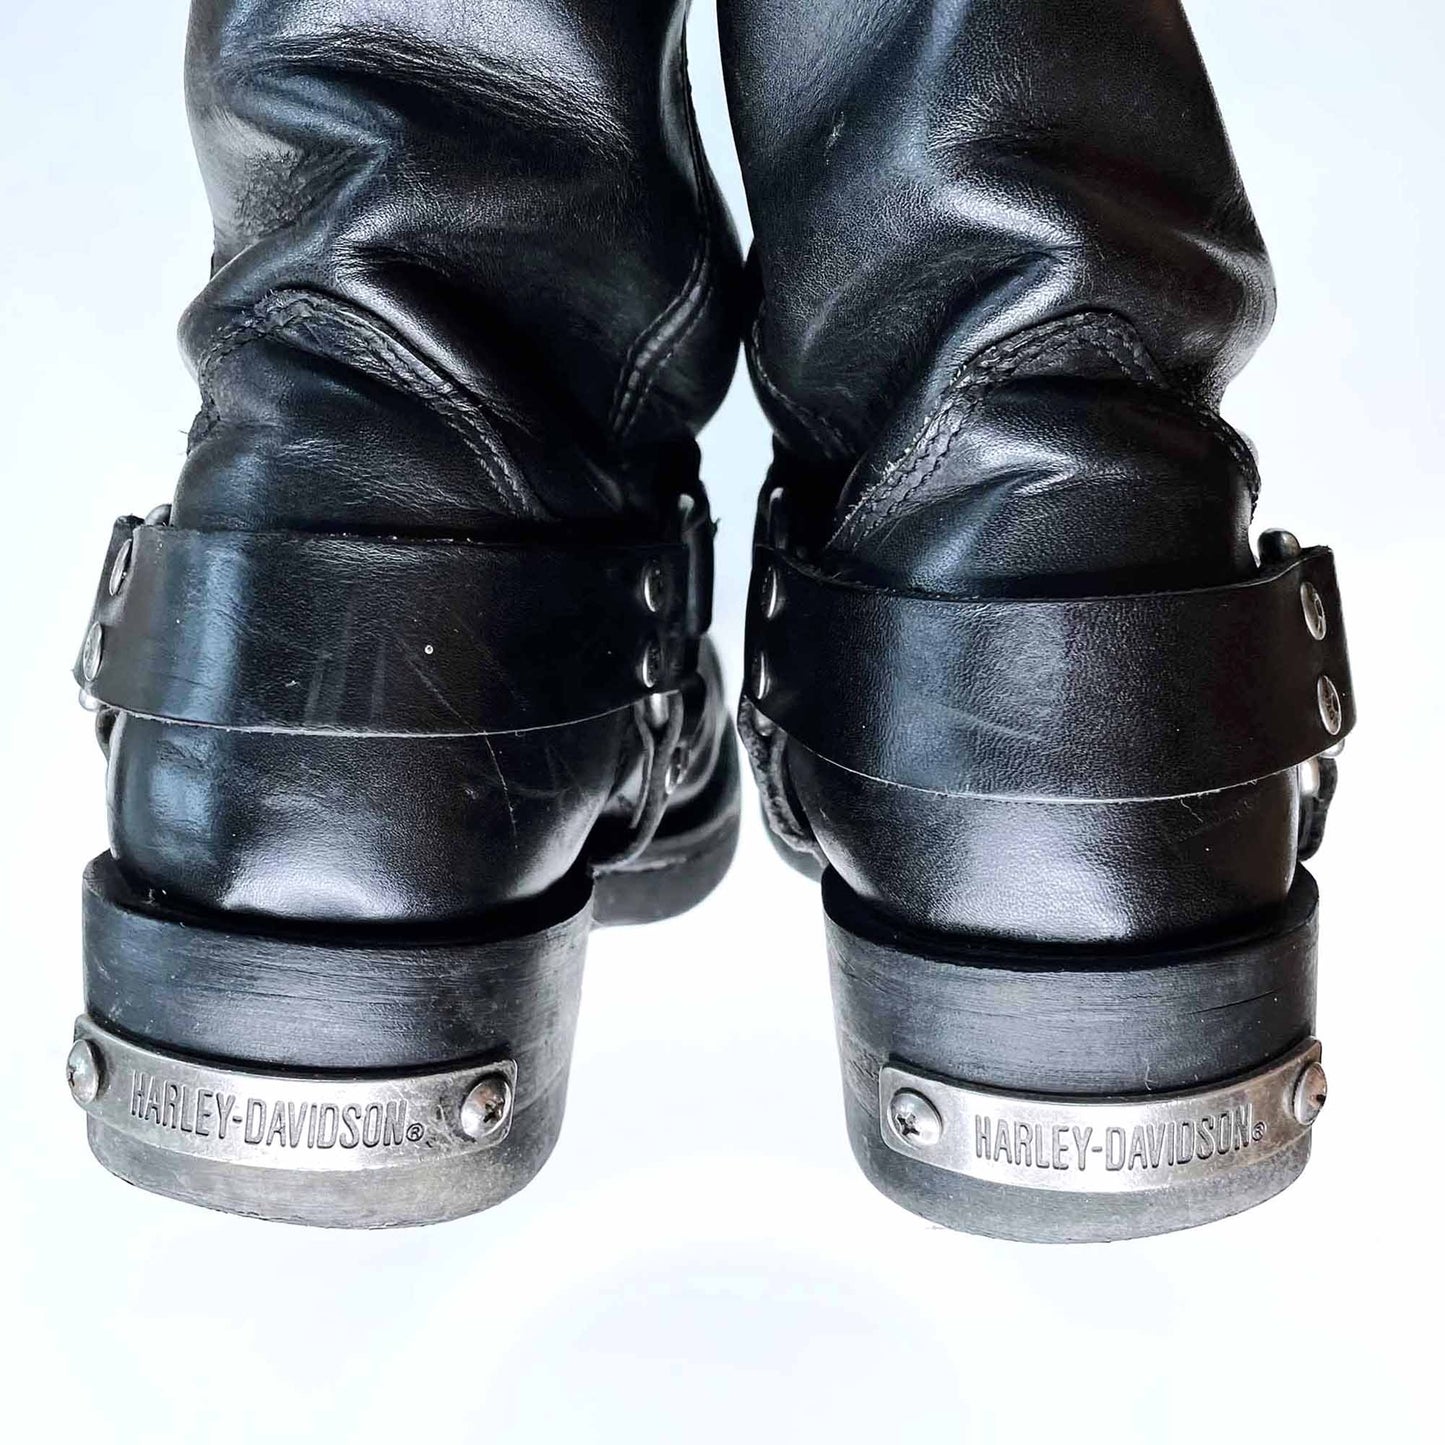 vintage harley davidson mega harness leather motorcycle boots - size 8 wide